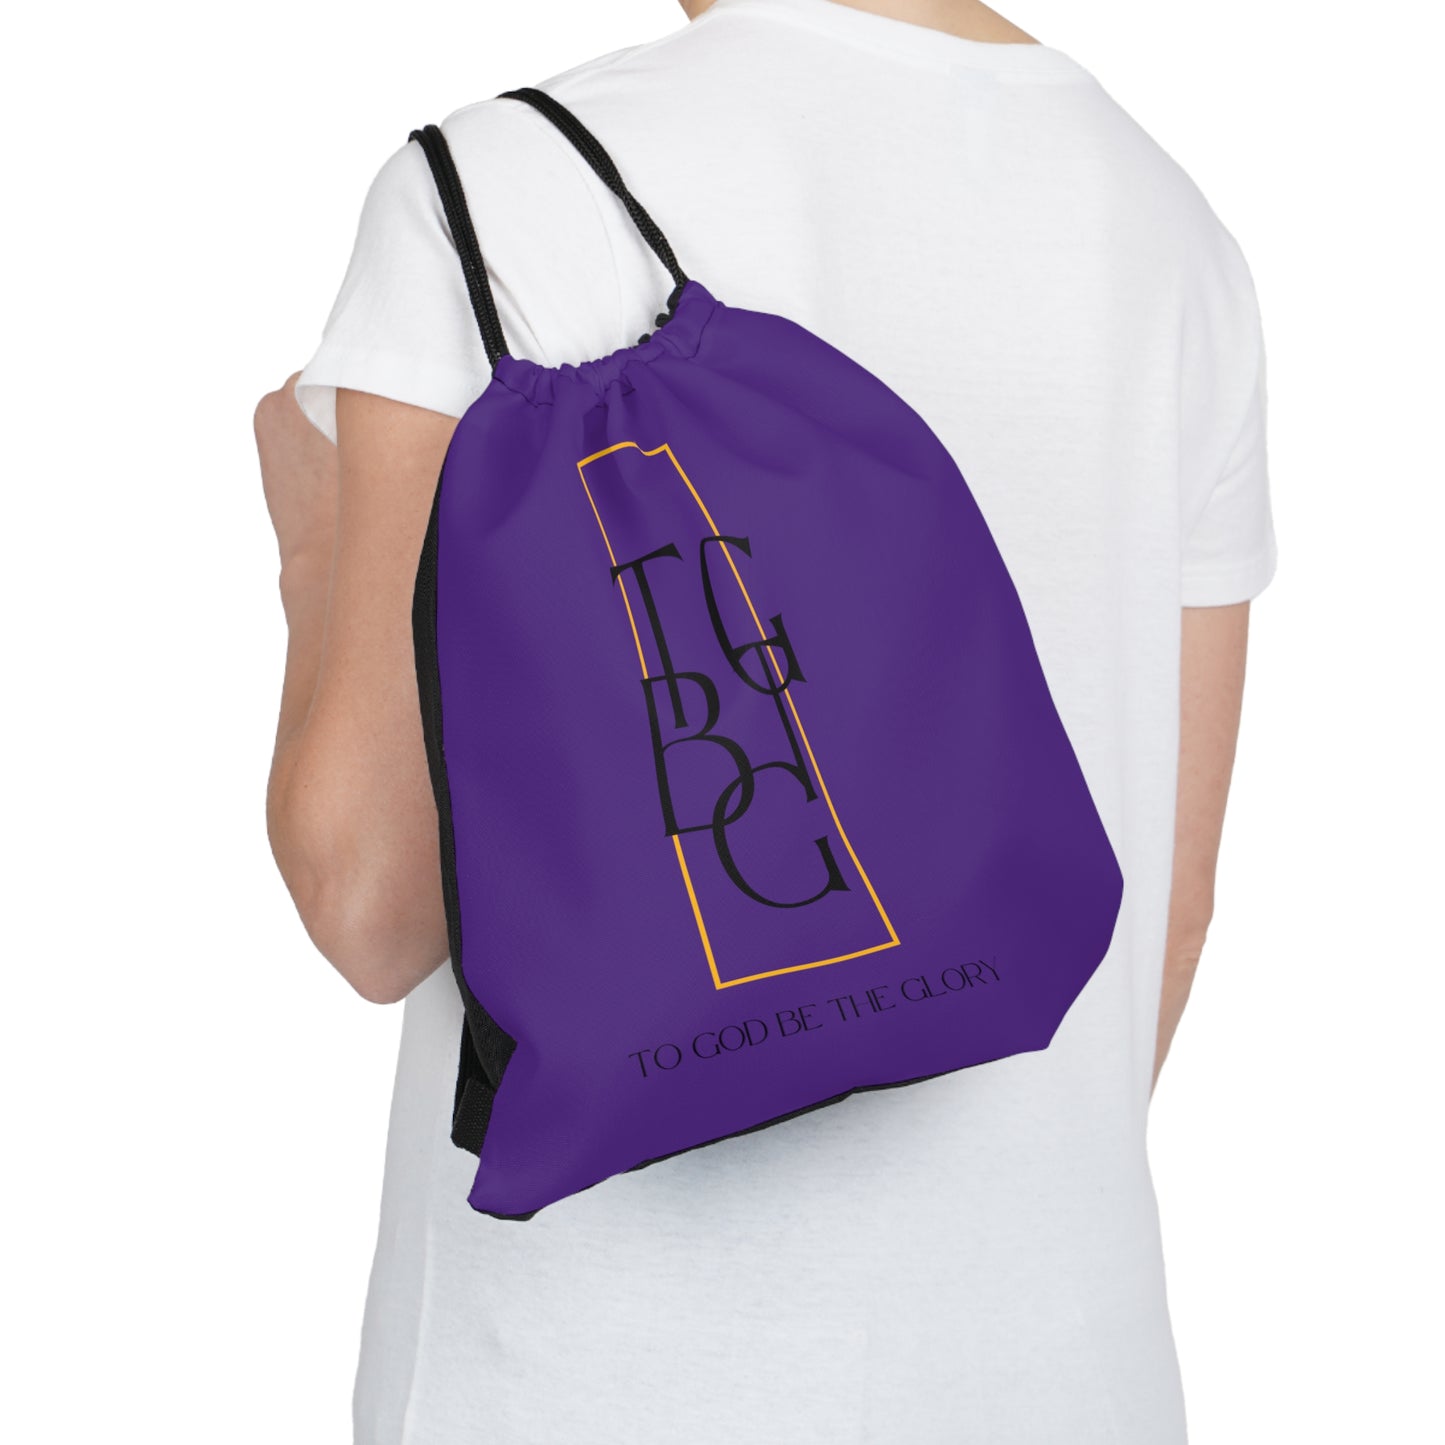 TGBTG Outdoor Drawstring Bag Purple